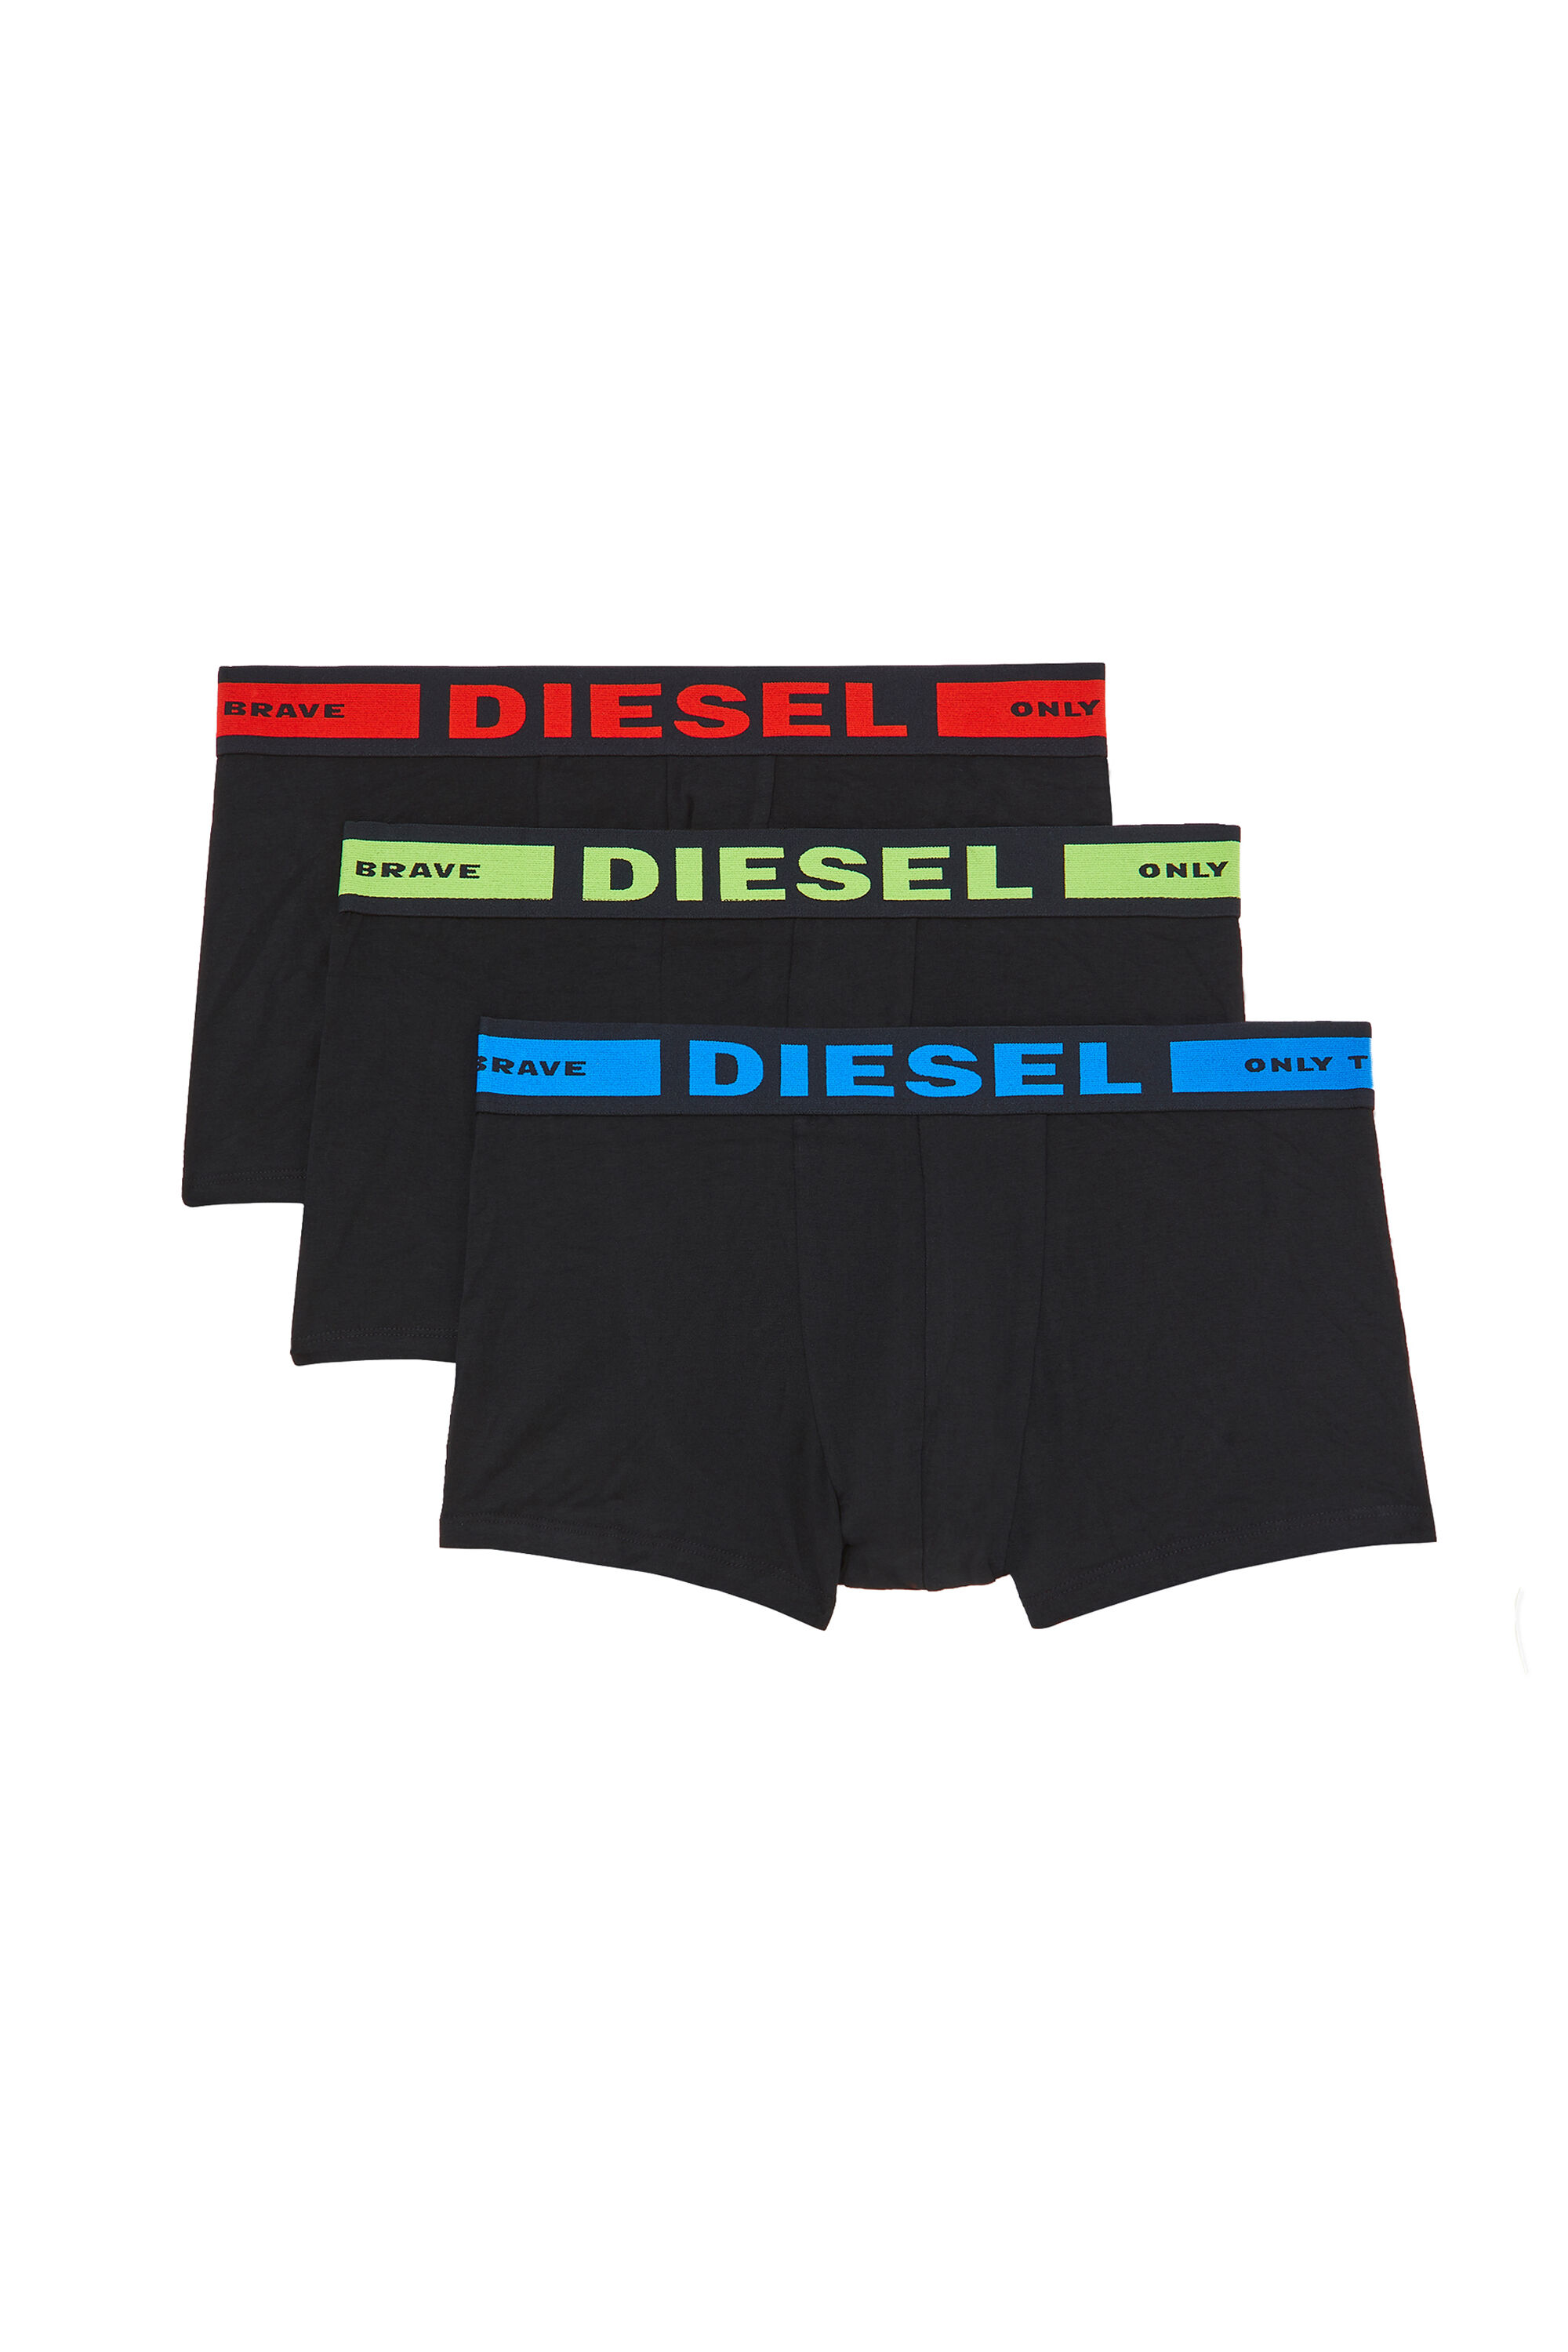 Diesel 3-Pack Basic Kory Trunks - Free Shipping at